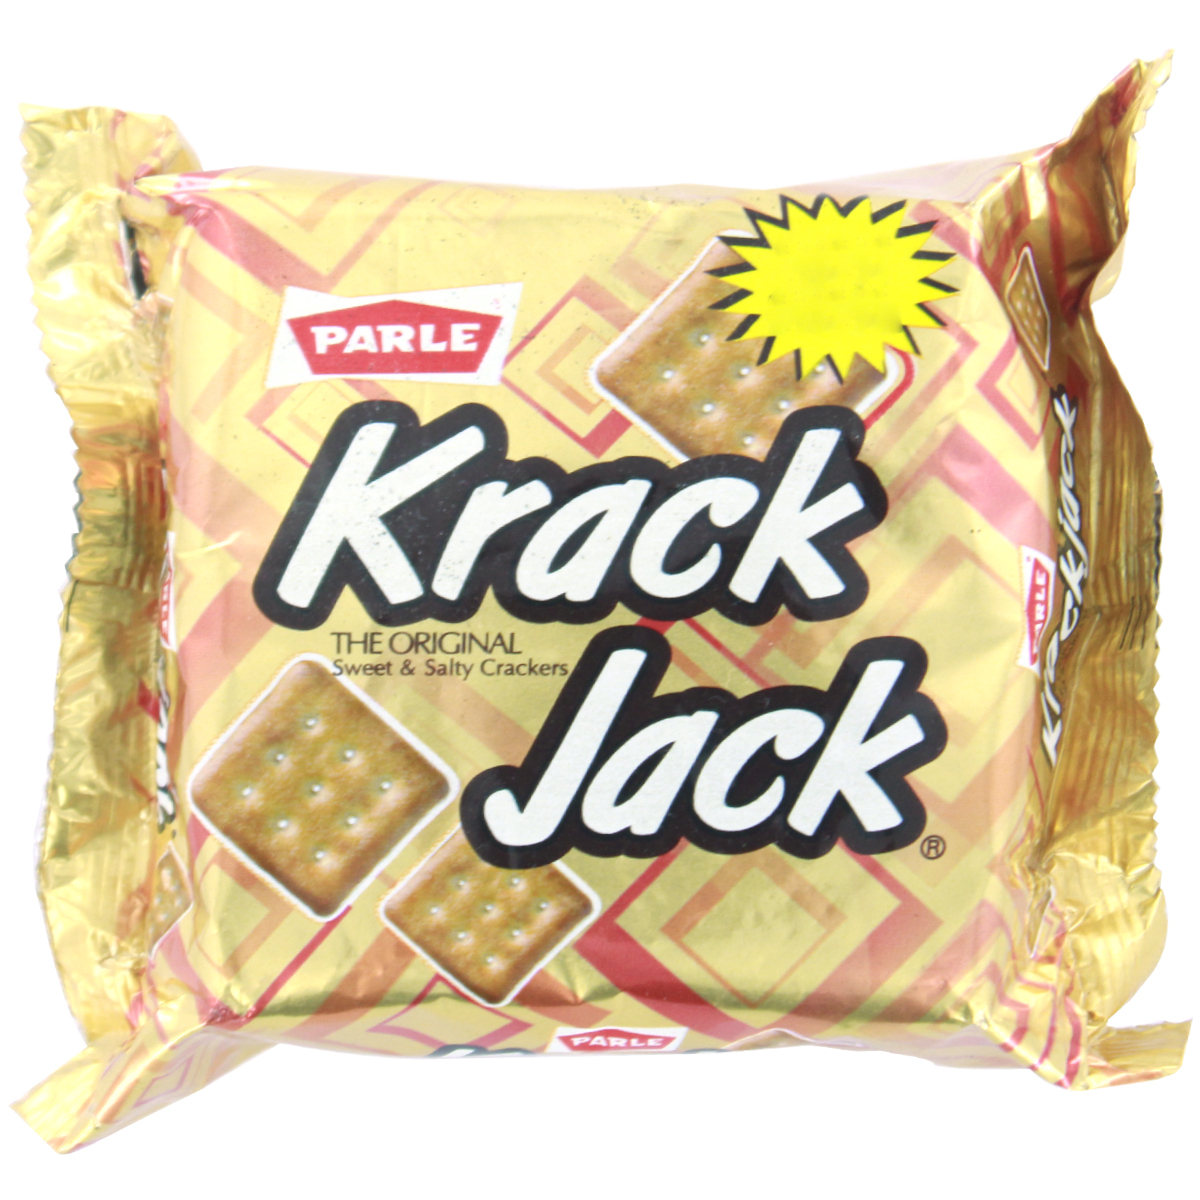 Parle Krack Jacker 40gm